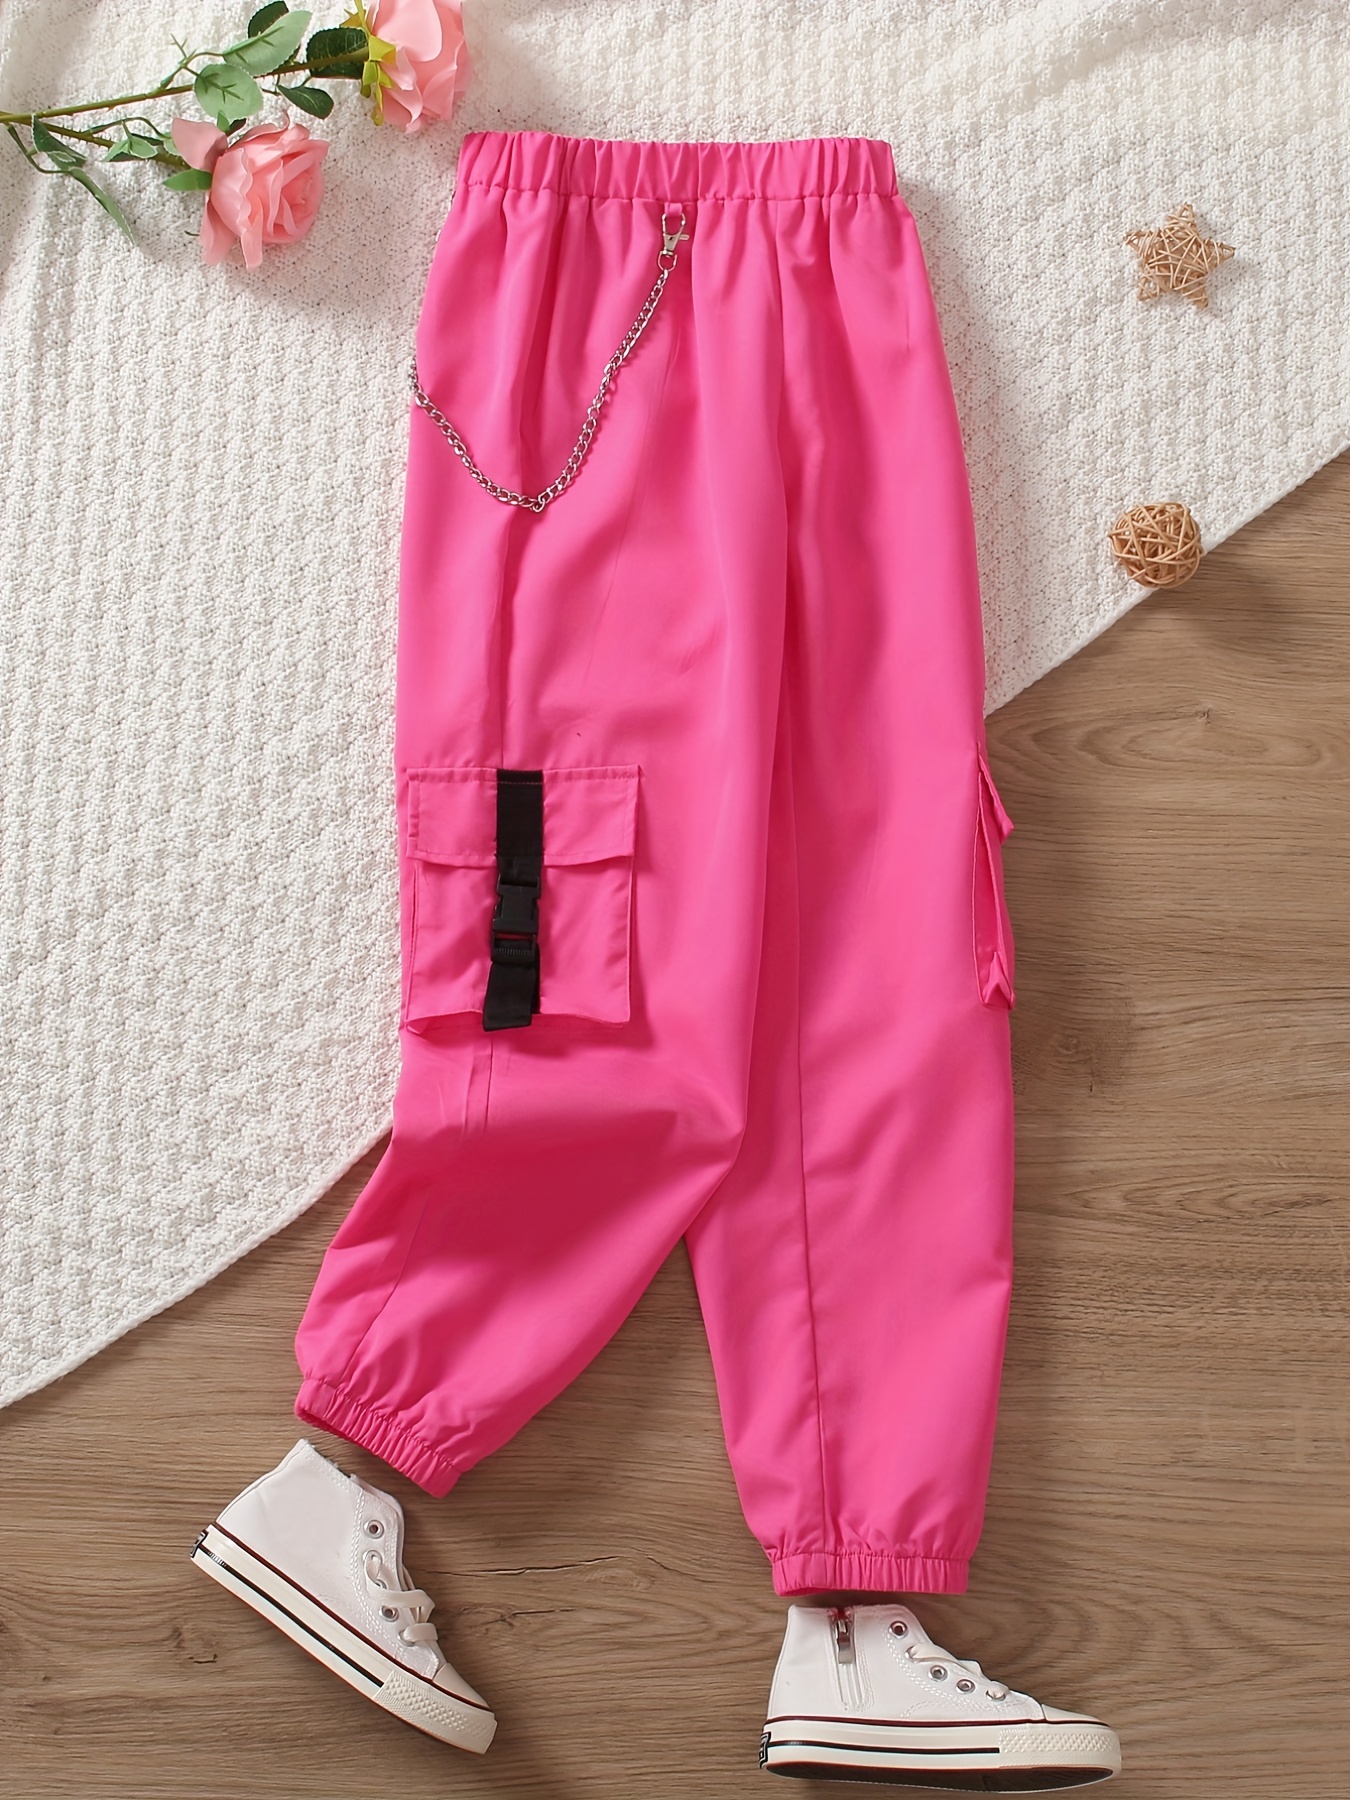 Gwiyeopda Toddler Baby Girl Tank Top Elastic Waist Cargo Pants Leggings  Summer Outfits Set 0-5 Years 